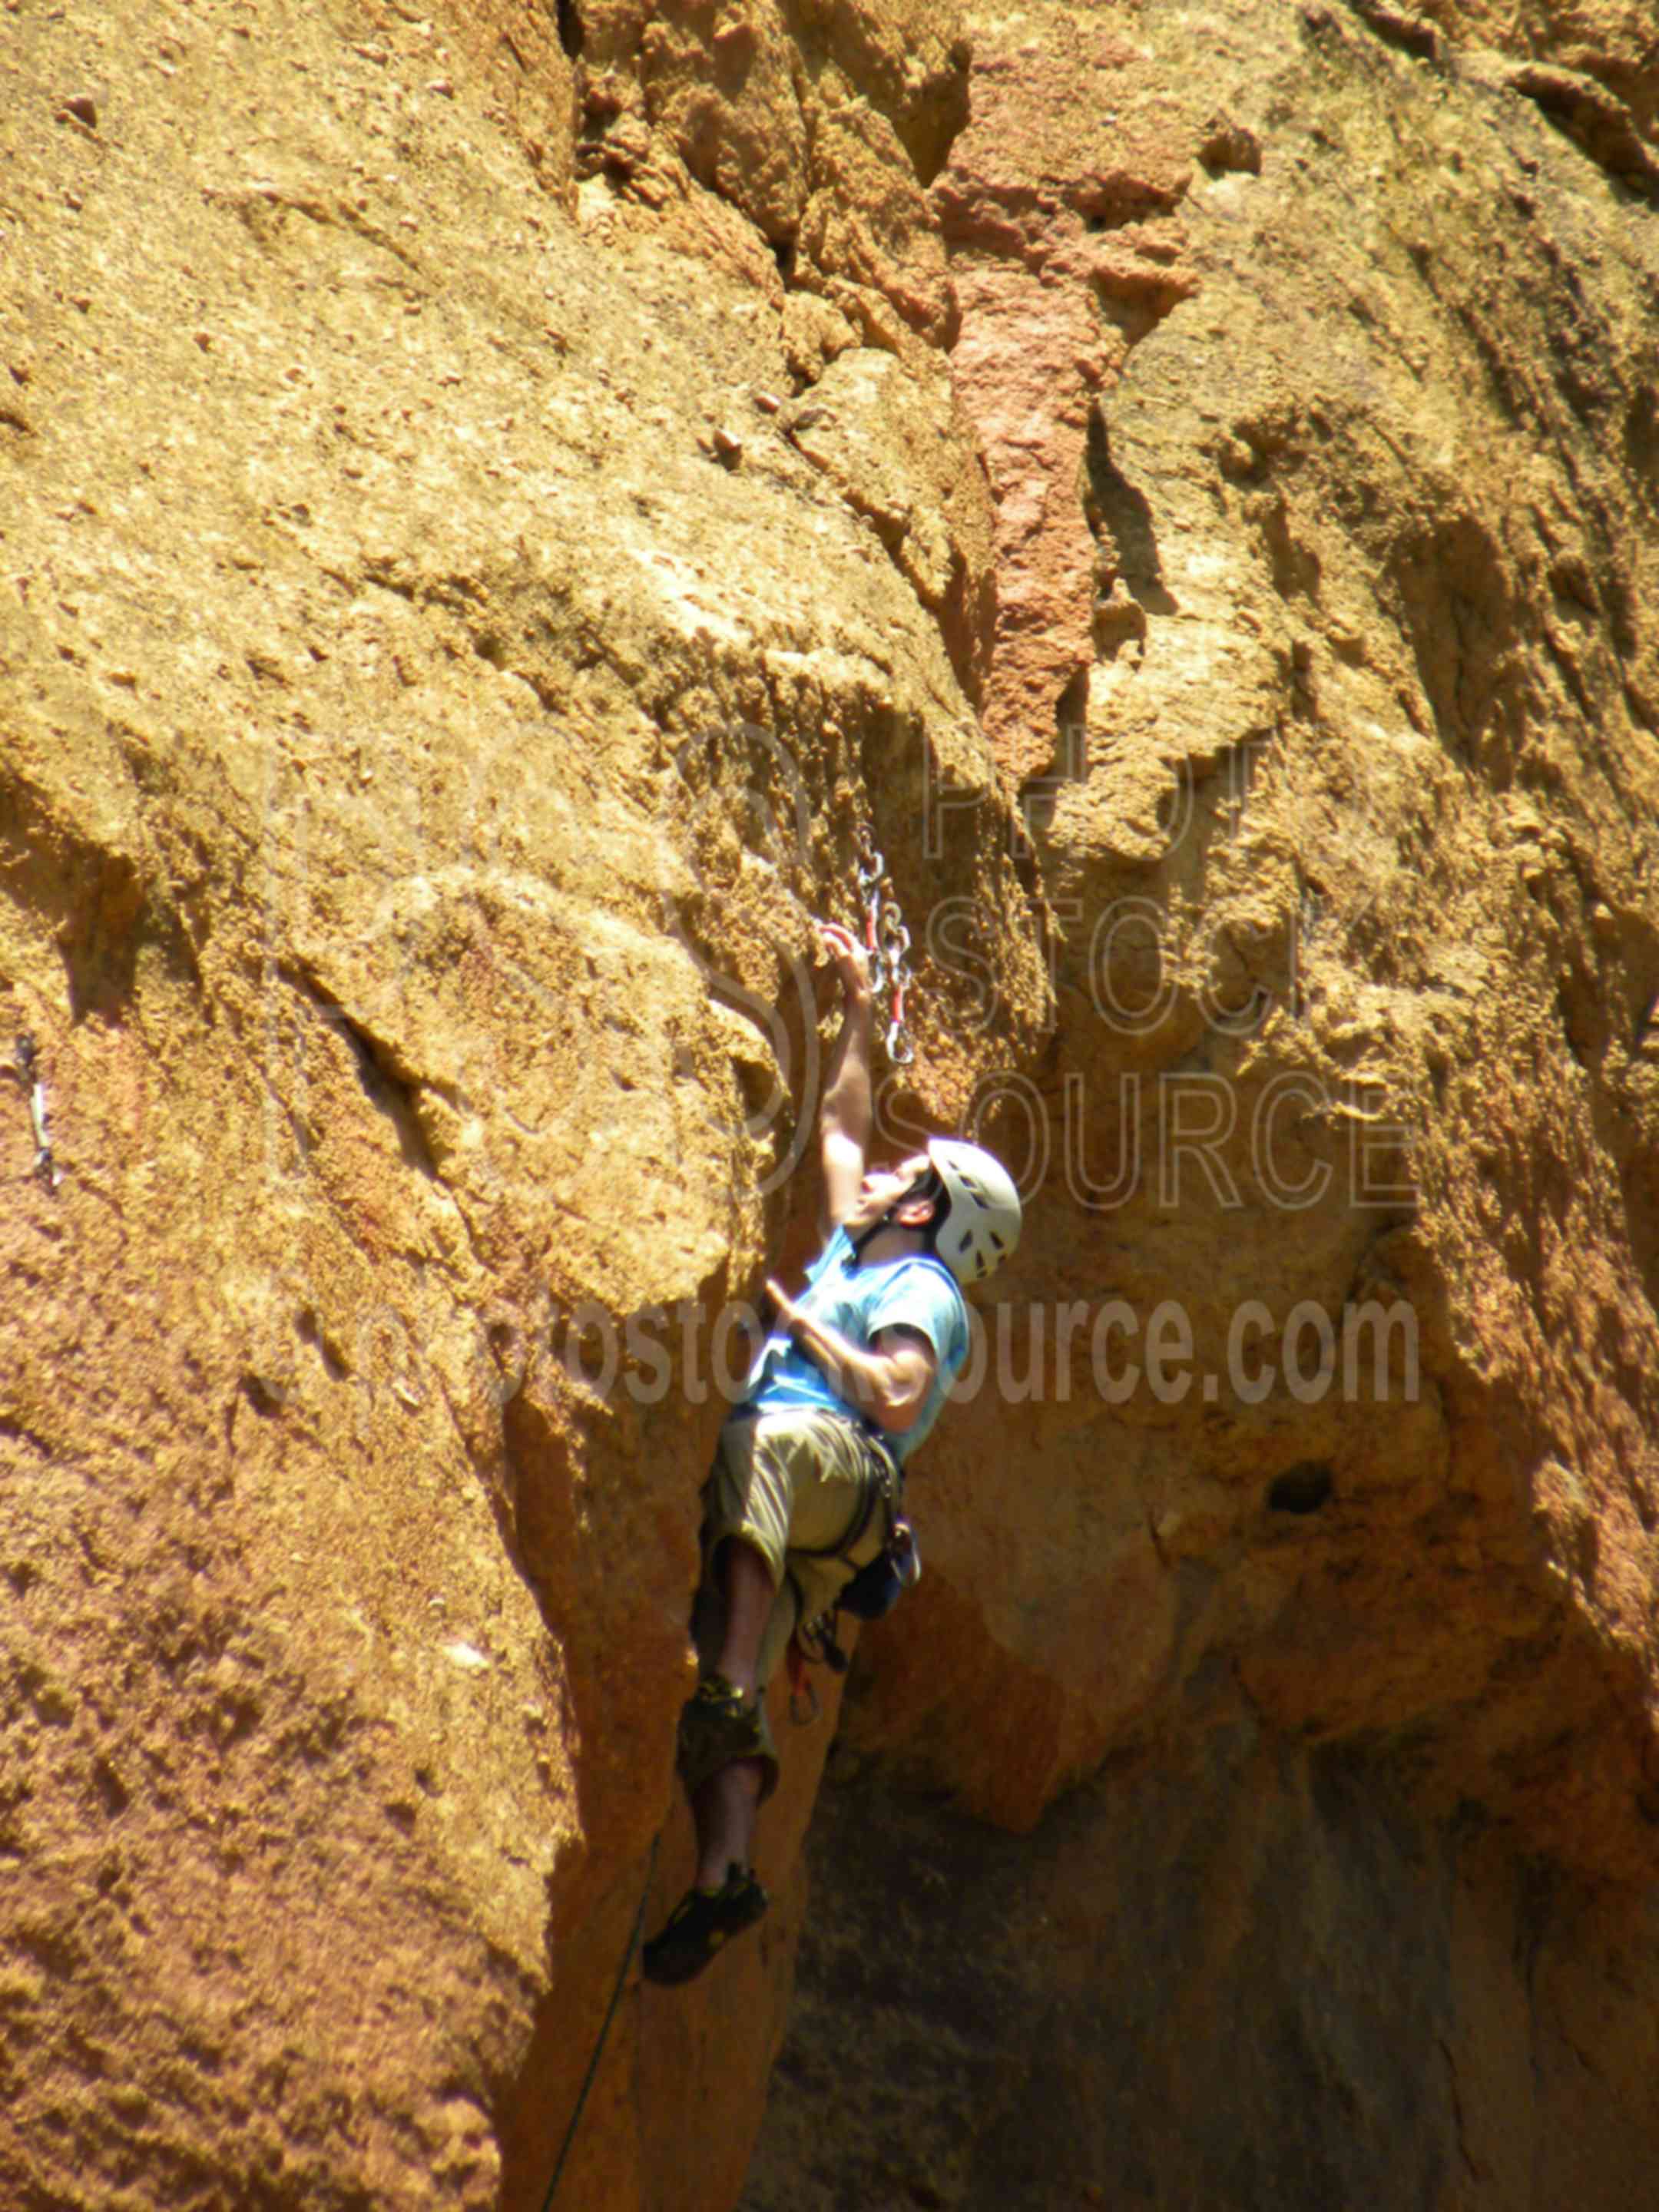 Climber at Smith Rocks,crooked river,rocks,climbing,rock climbing,climber,adventure,risk,sport,strenuous